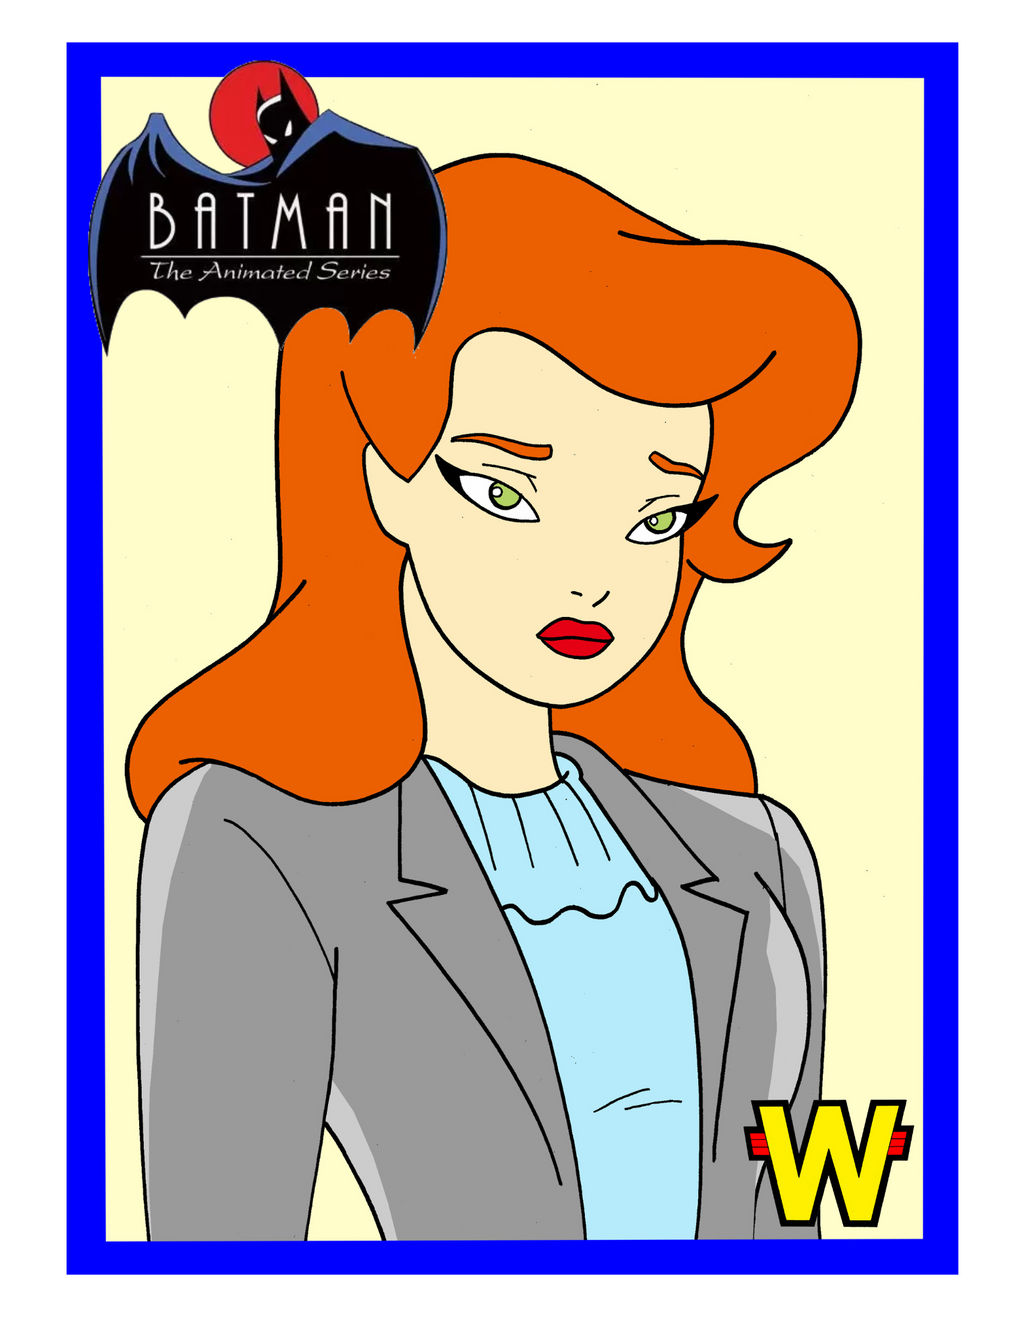 1992 Pamela Isley Batman Animated Series by donandron on DeviantArt